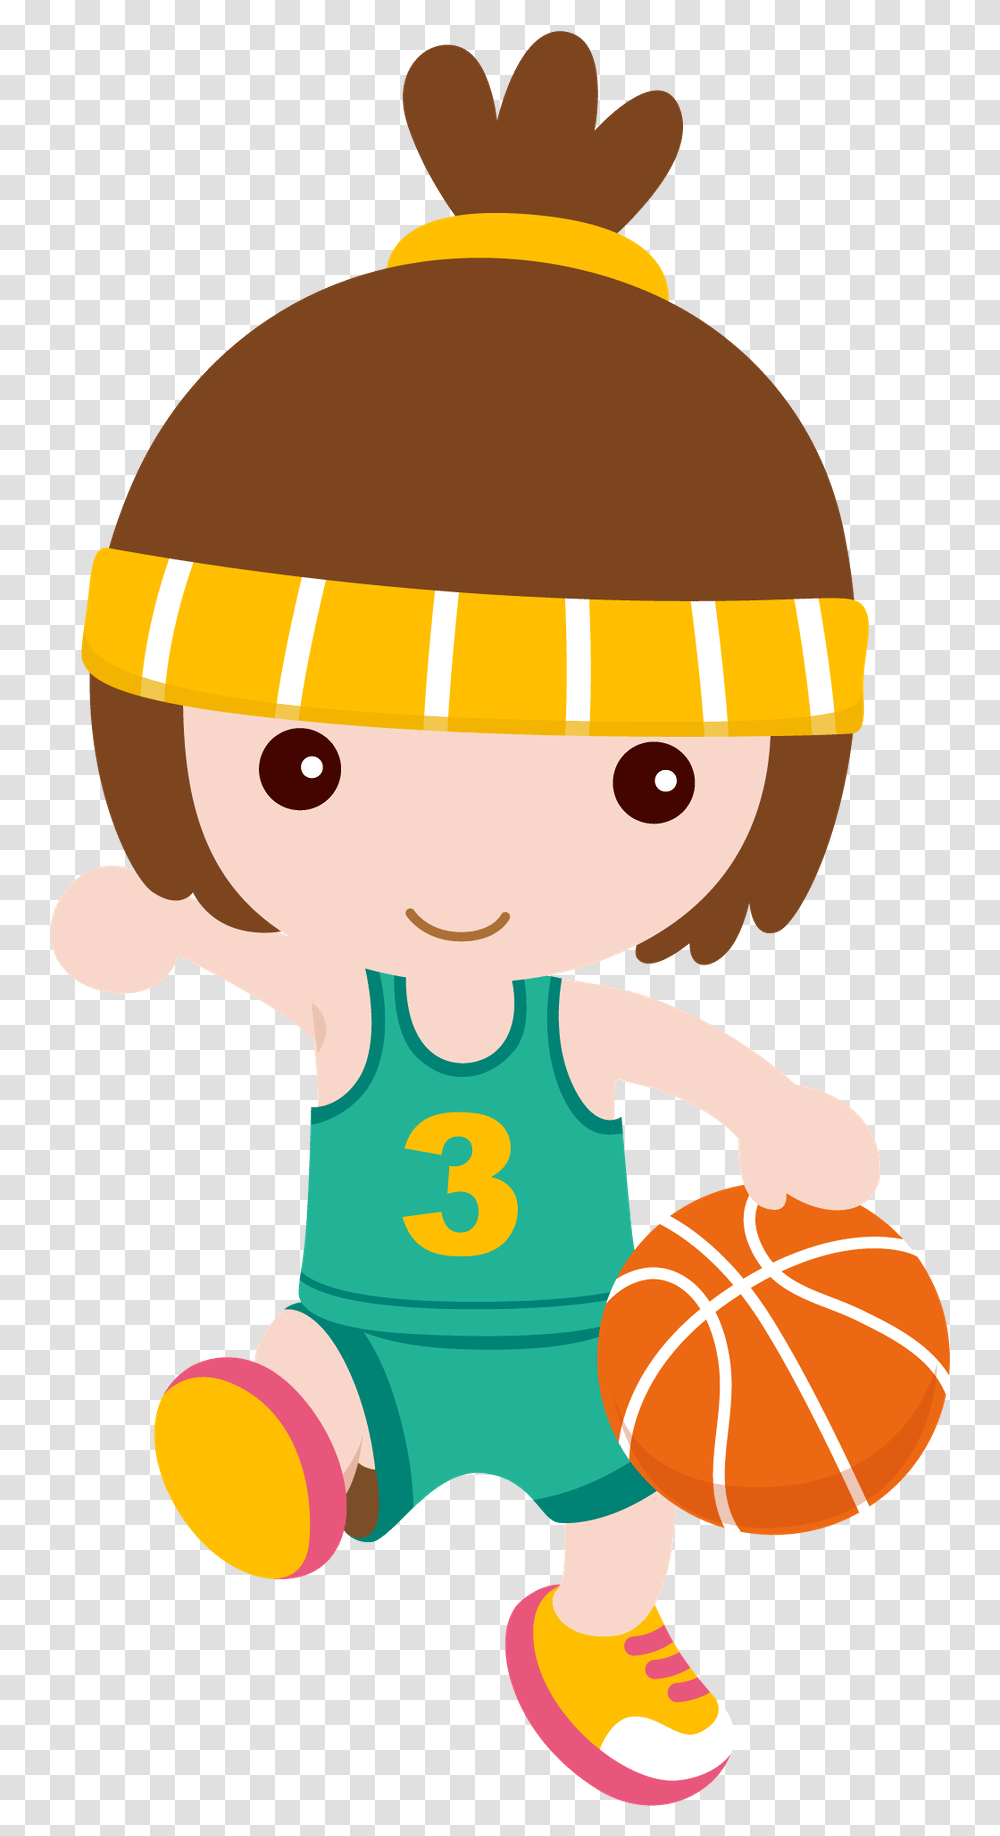 Cartoon Basketball Minus Tweety Clipart Basketball Imgenes Del Bsquetbol Animadas, Clothing, Apparel, Sweets, Food Transparent Png